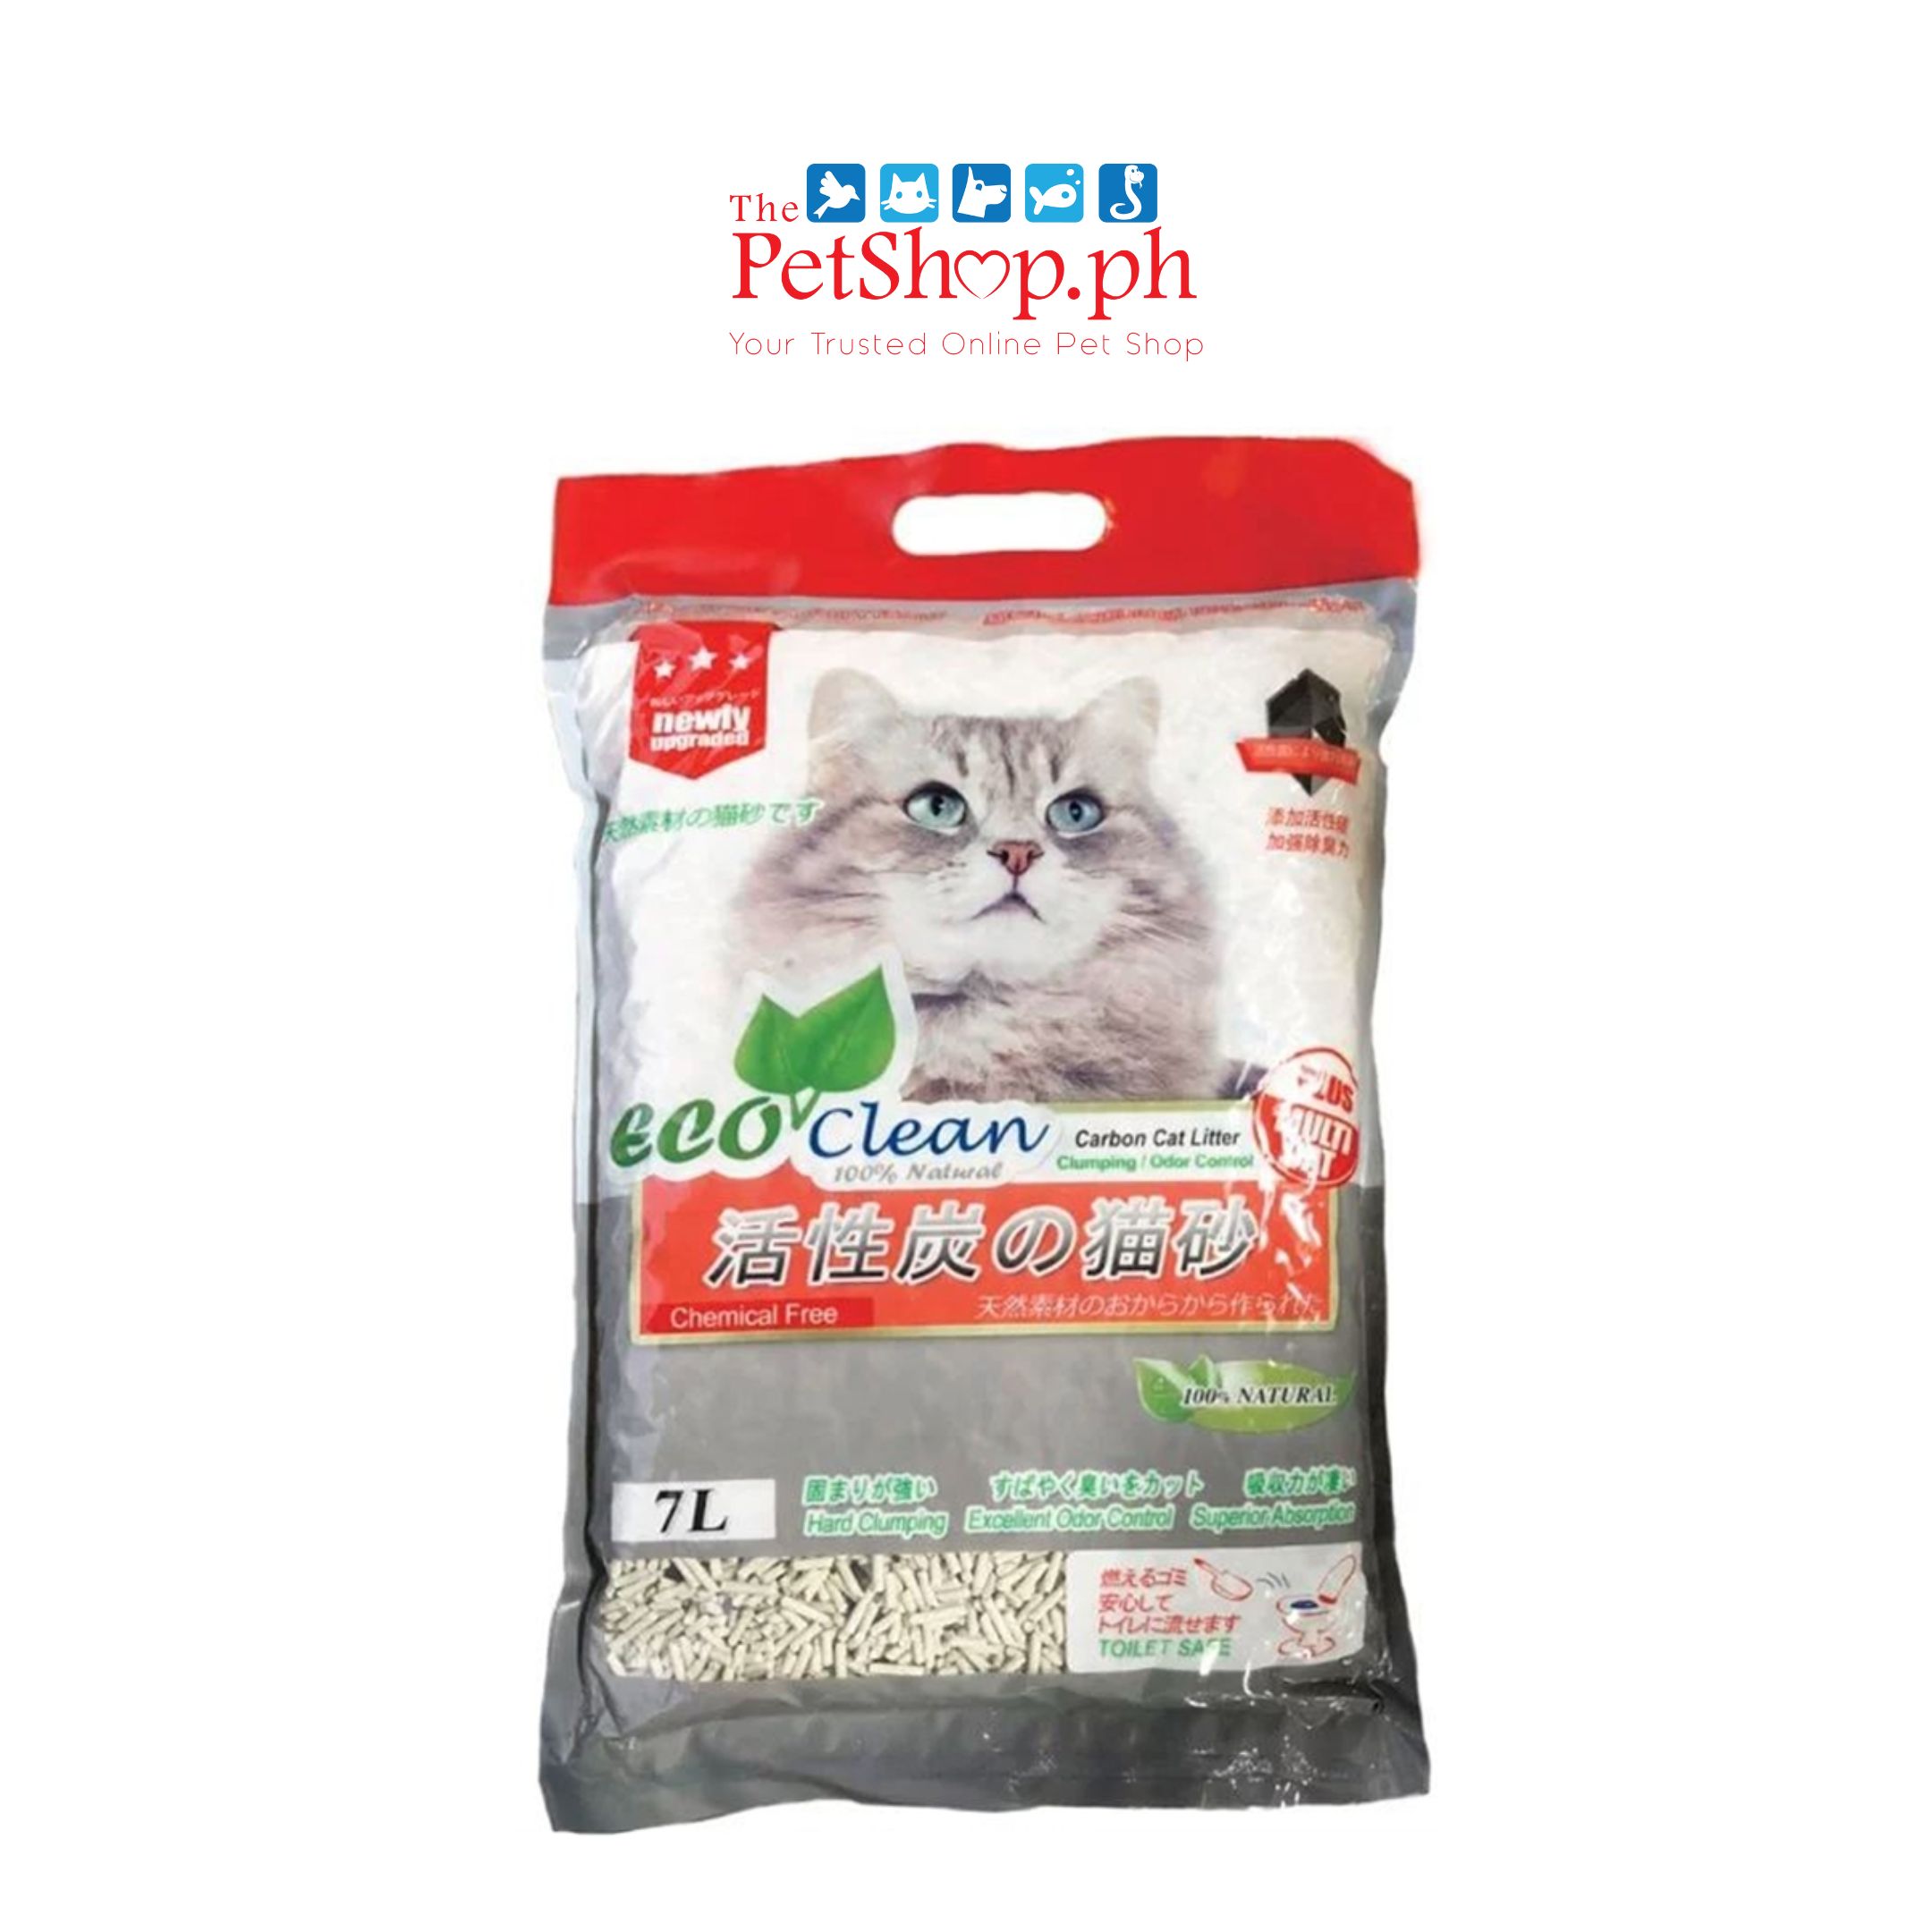 Eco Clean Tofu Set of 6 - Corn Scent Cat Litter Clumping 7L